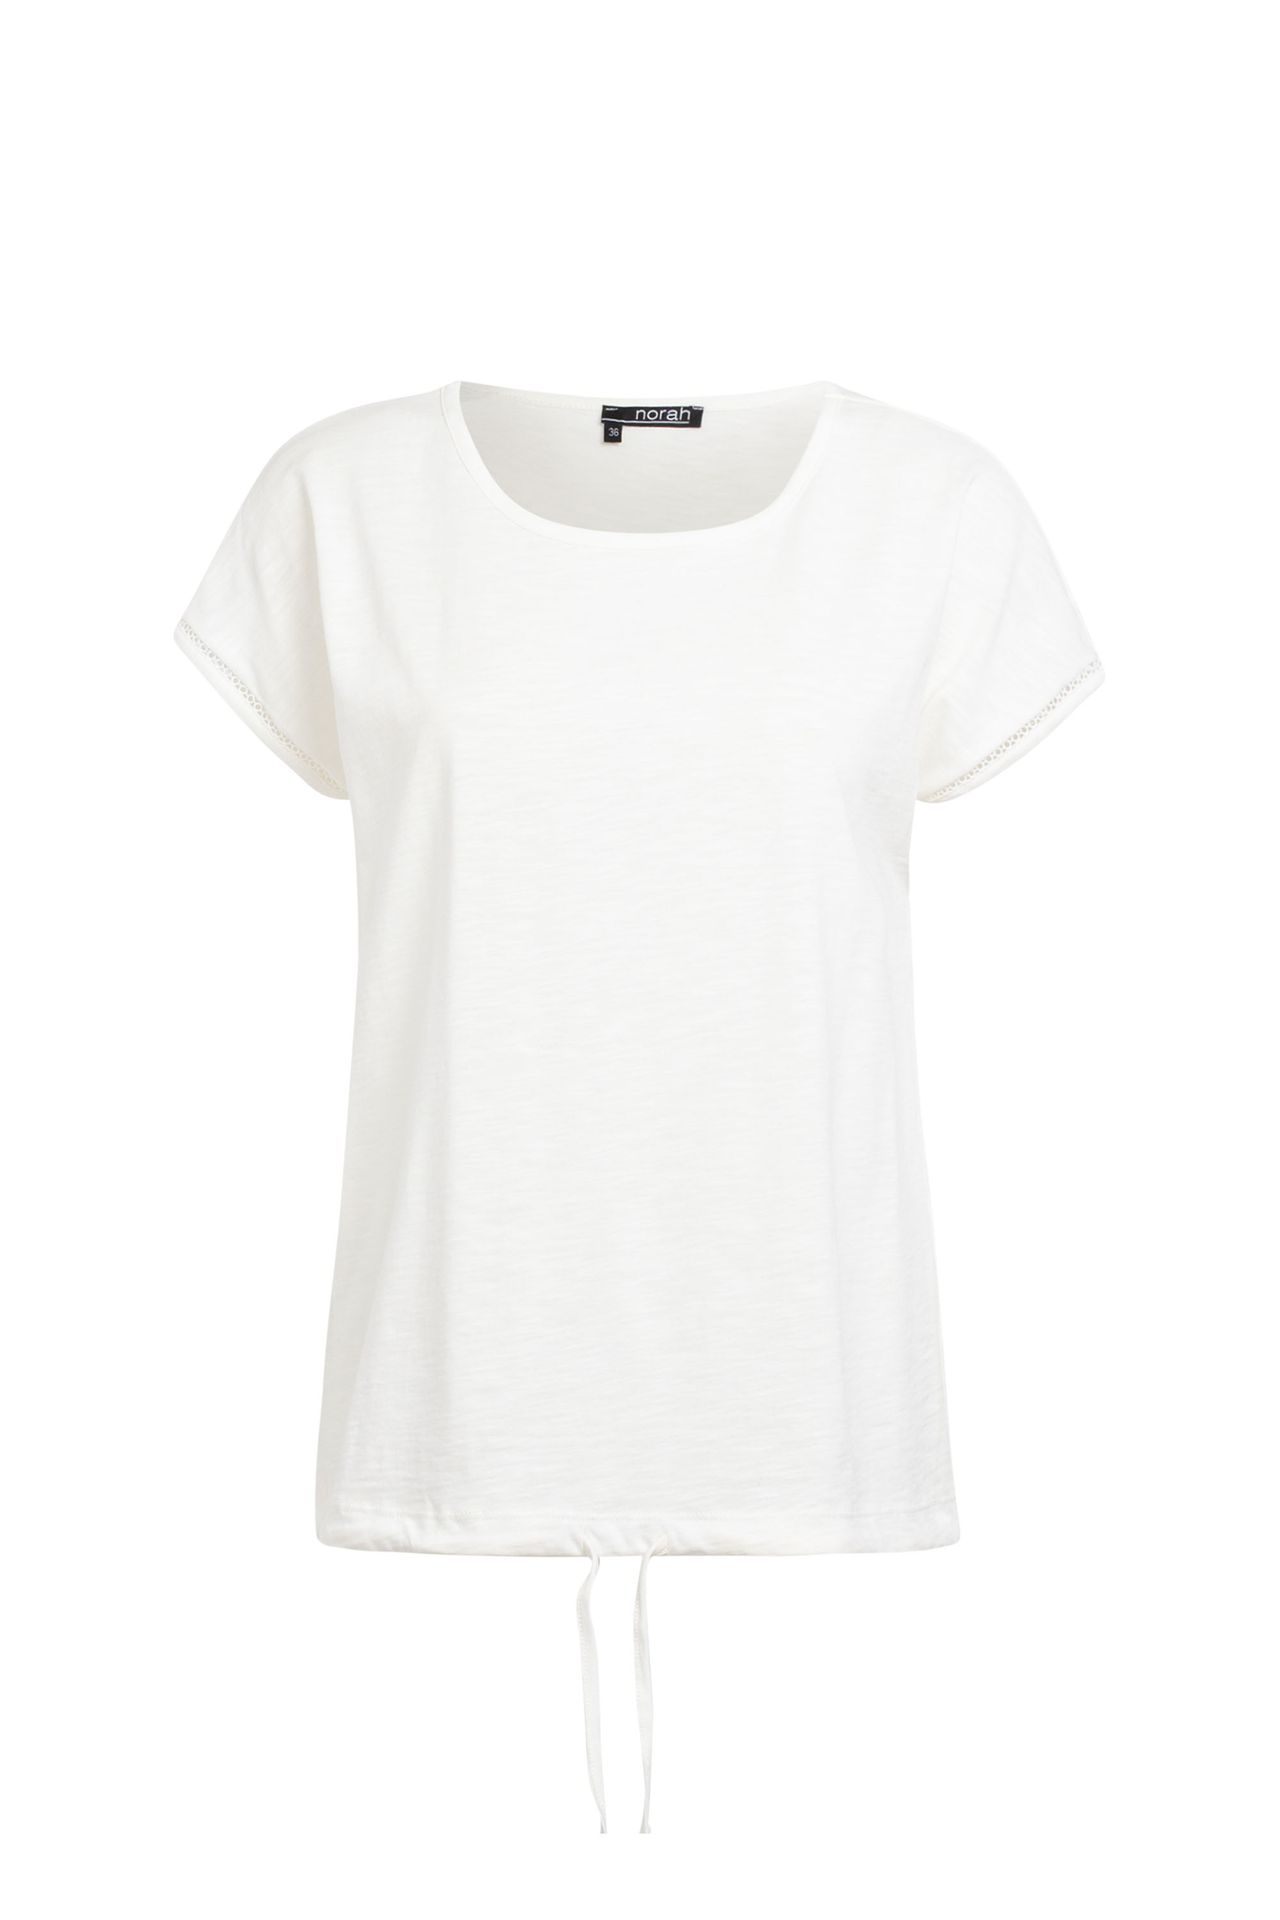 Norah Shirt wit off-white 209485-101